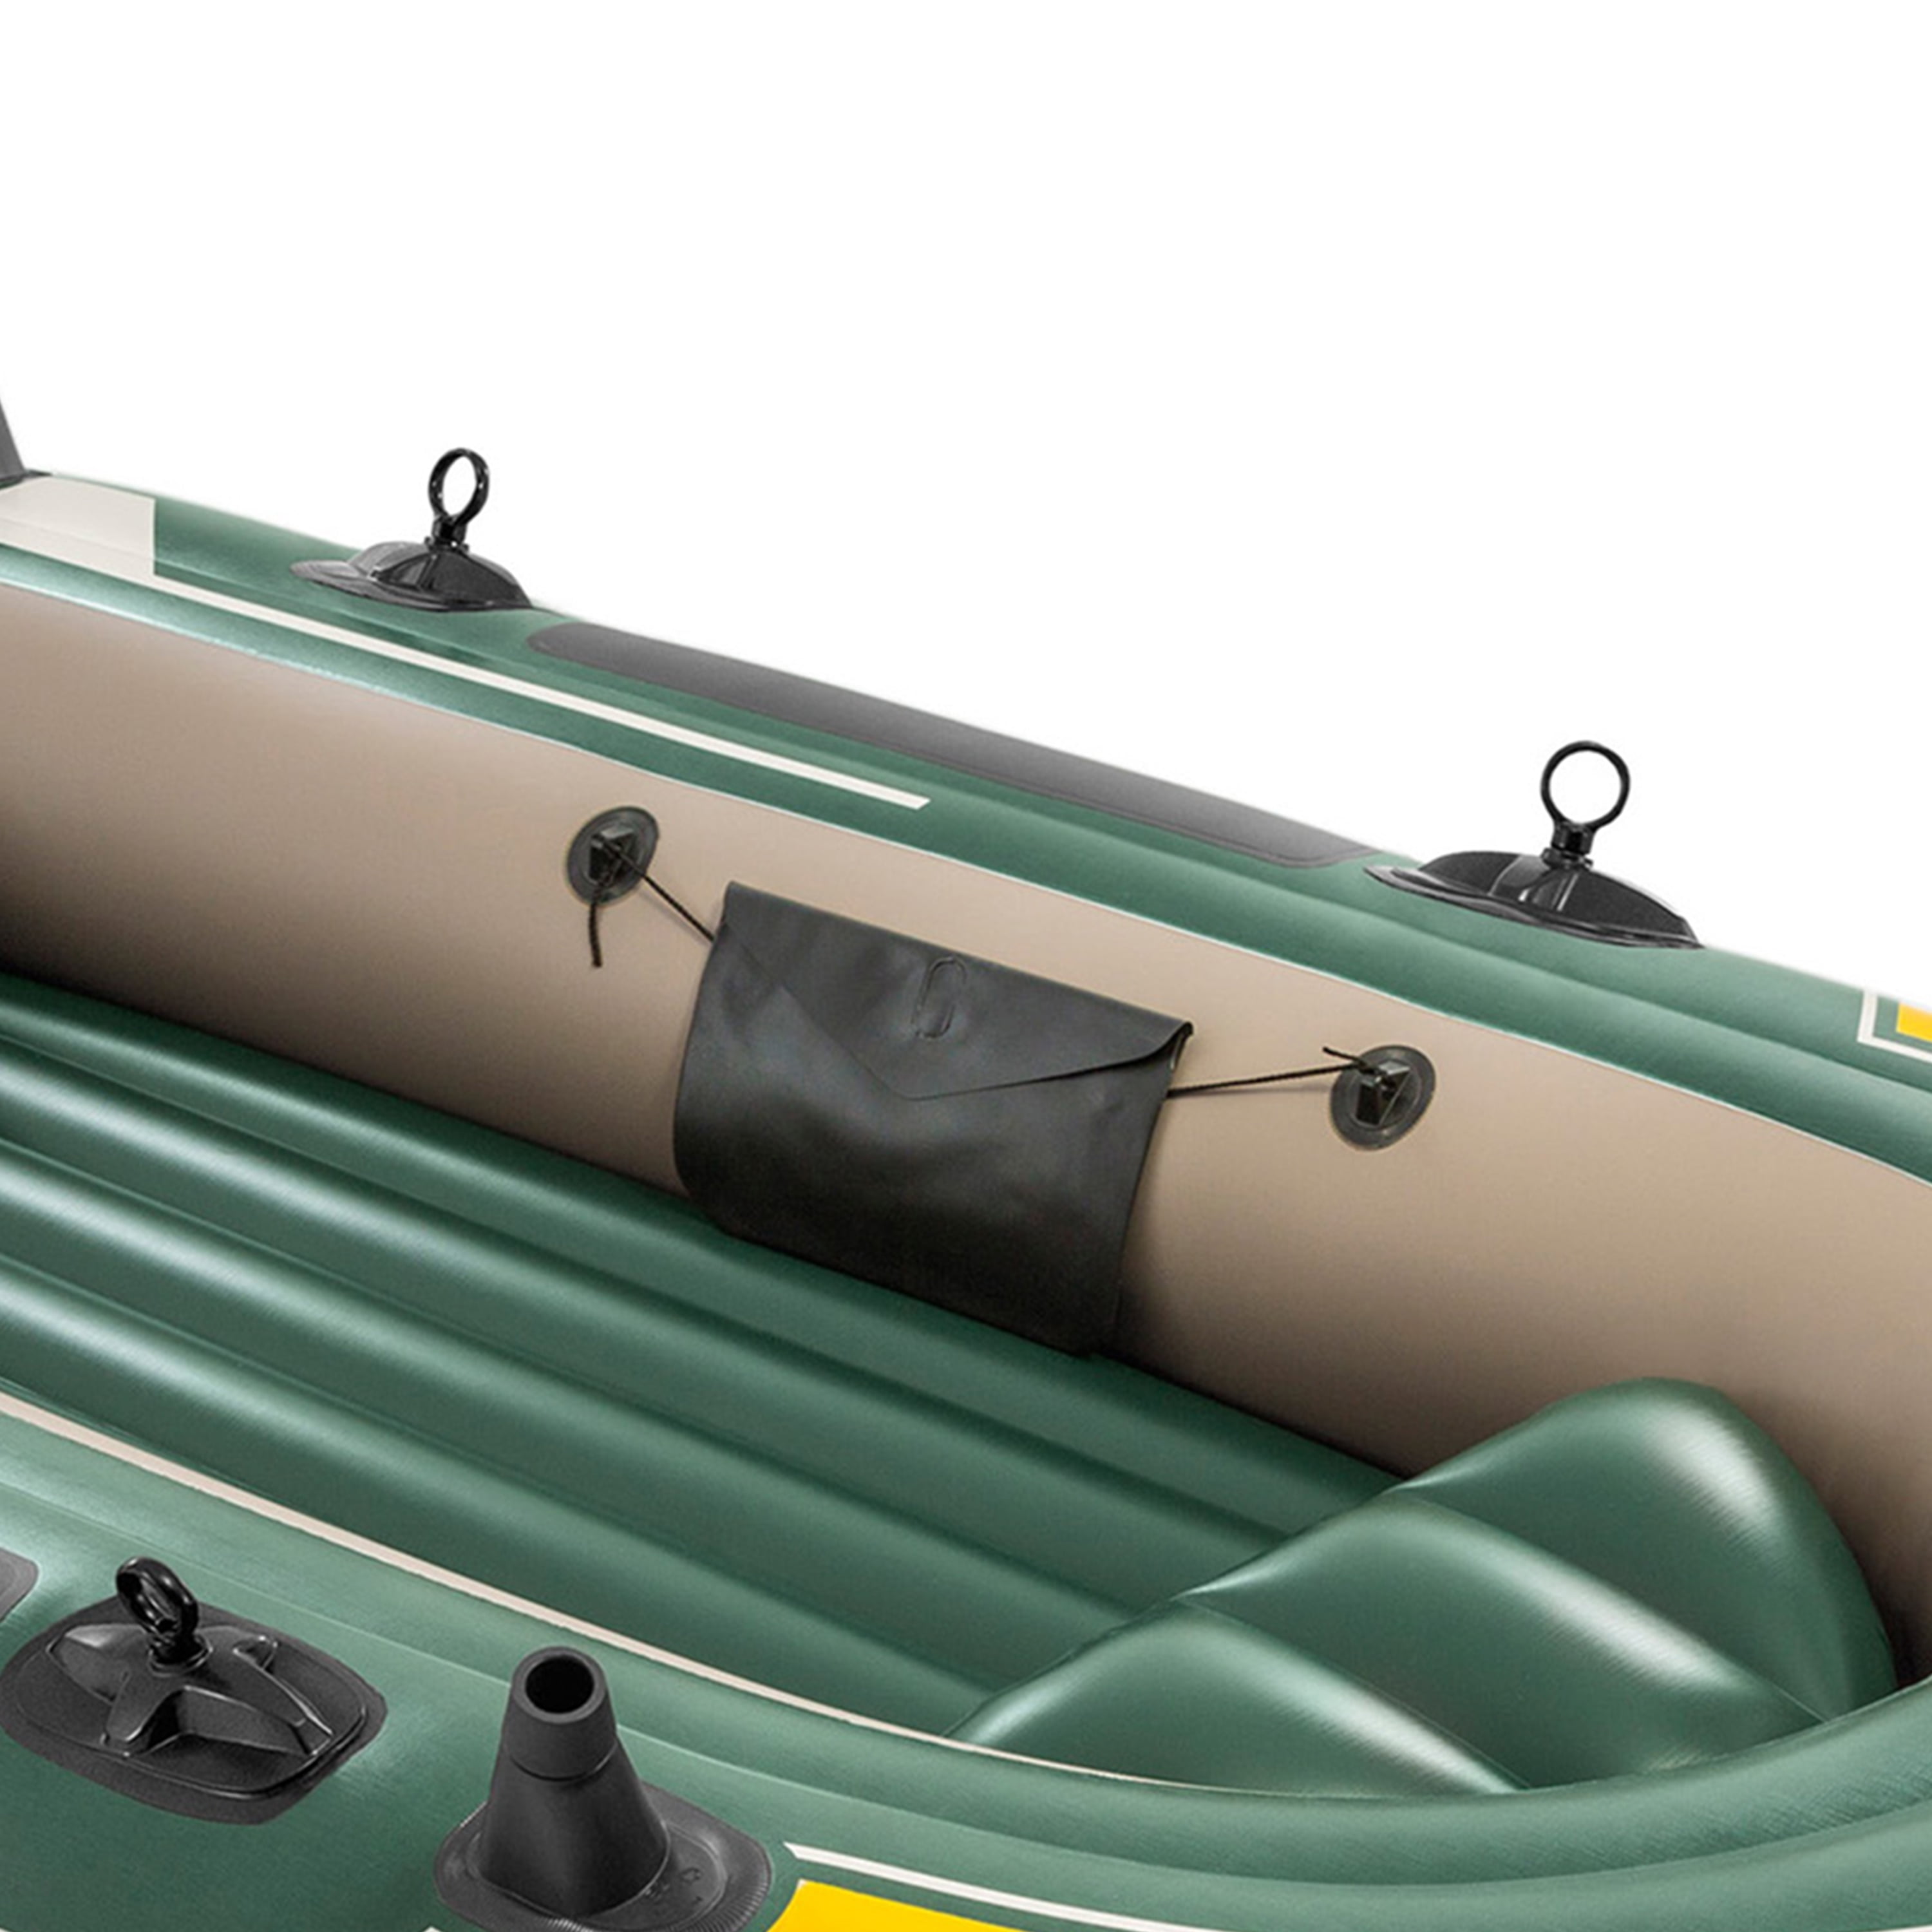 Intex Seahawk 3 Person Inflatable Rafting Boat Set w/ Aluminum Oars & Pump  